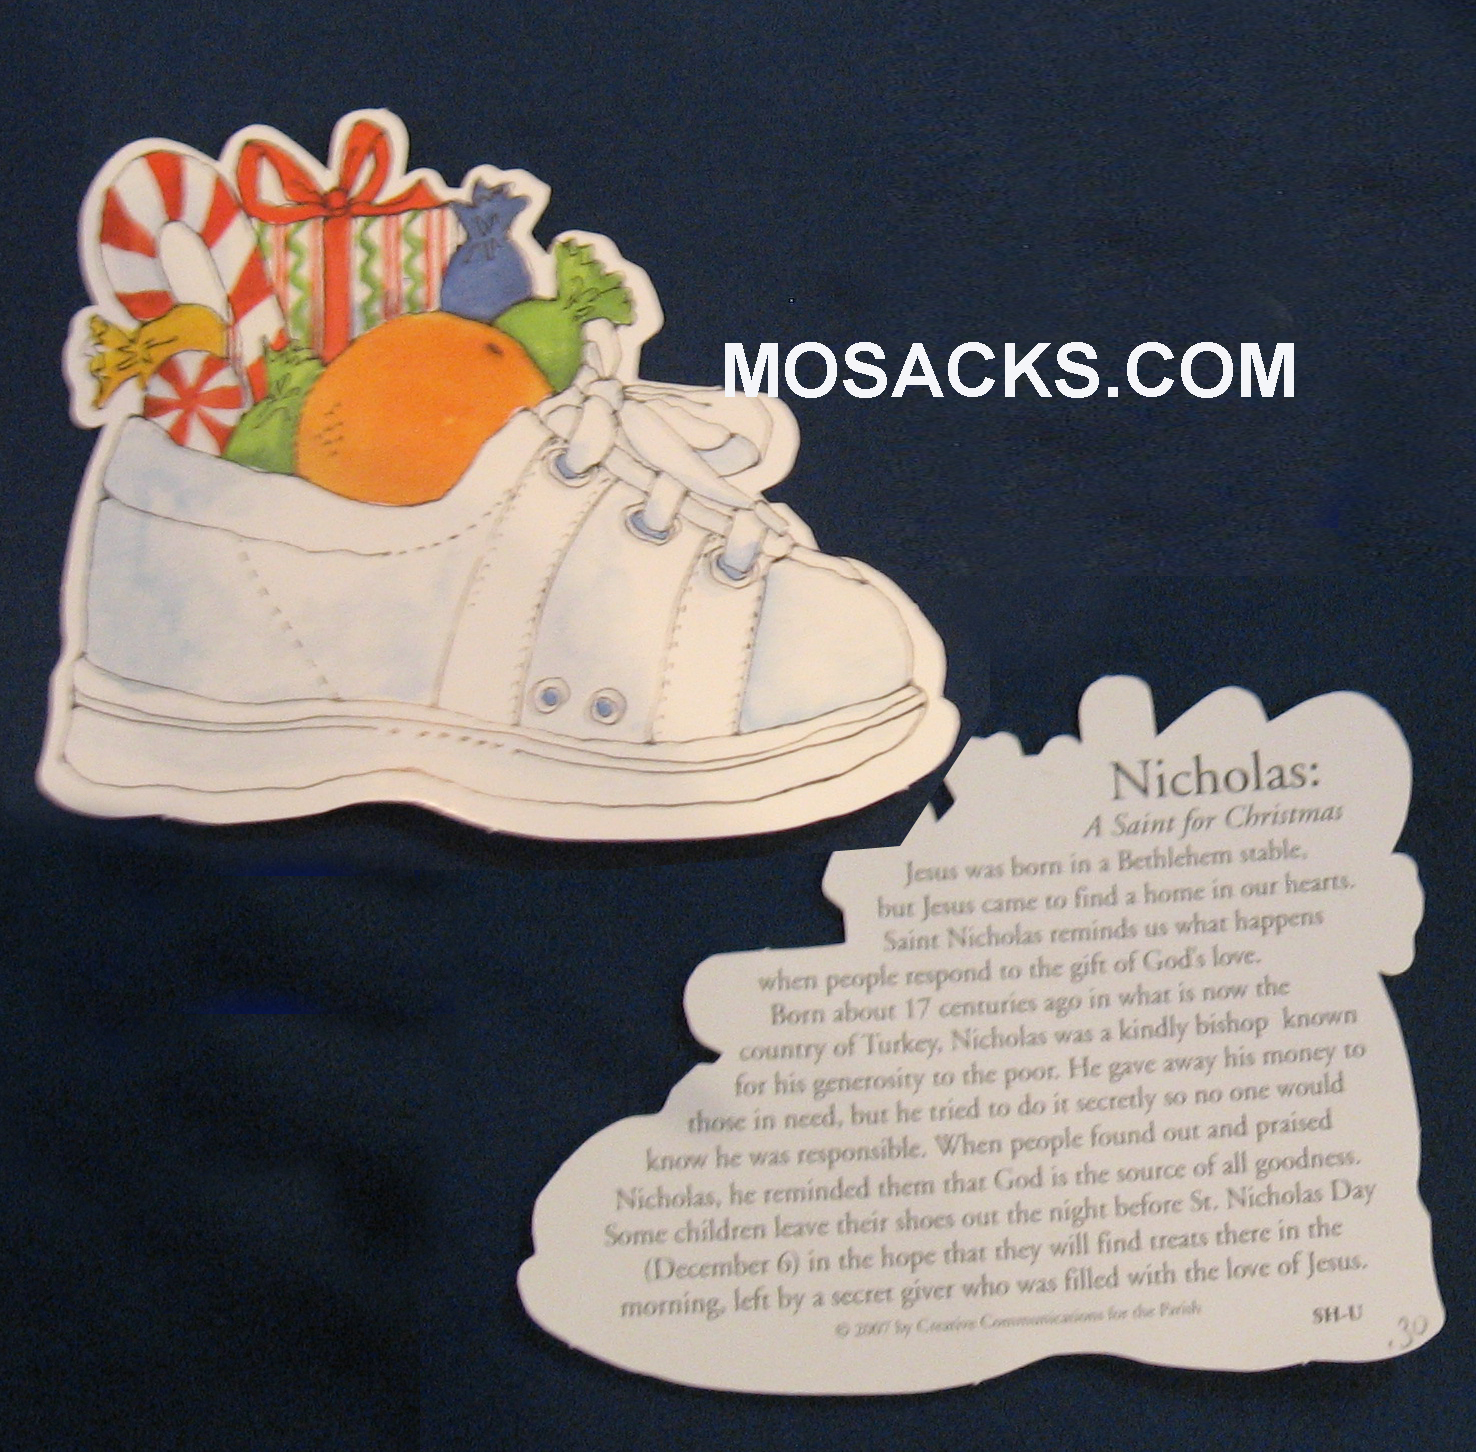 Saint Nicholas Shoe Card with biography of Nicholas and Dec 6th Custom-SH-U